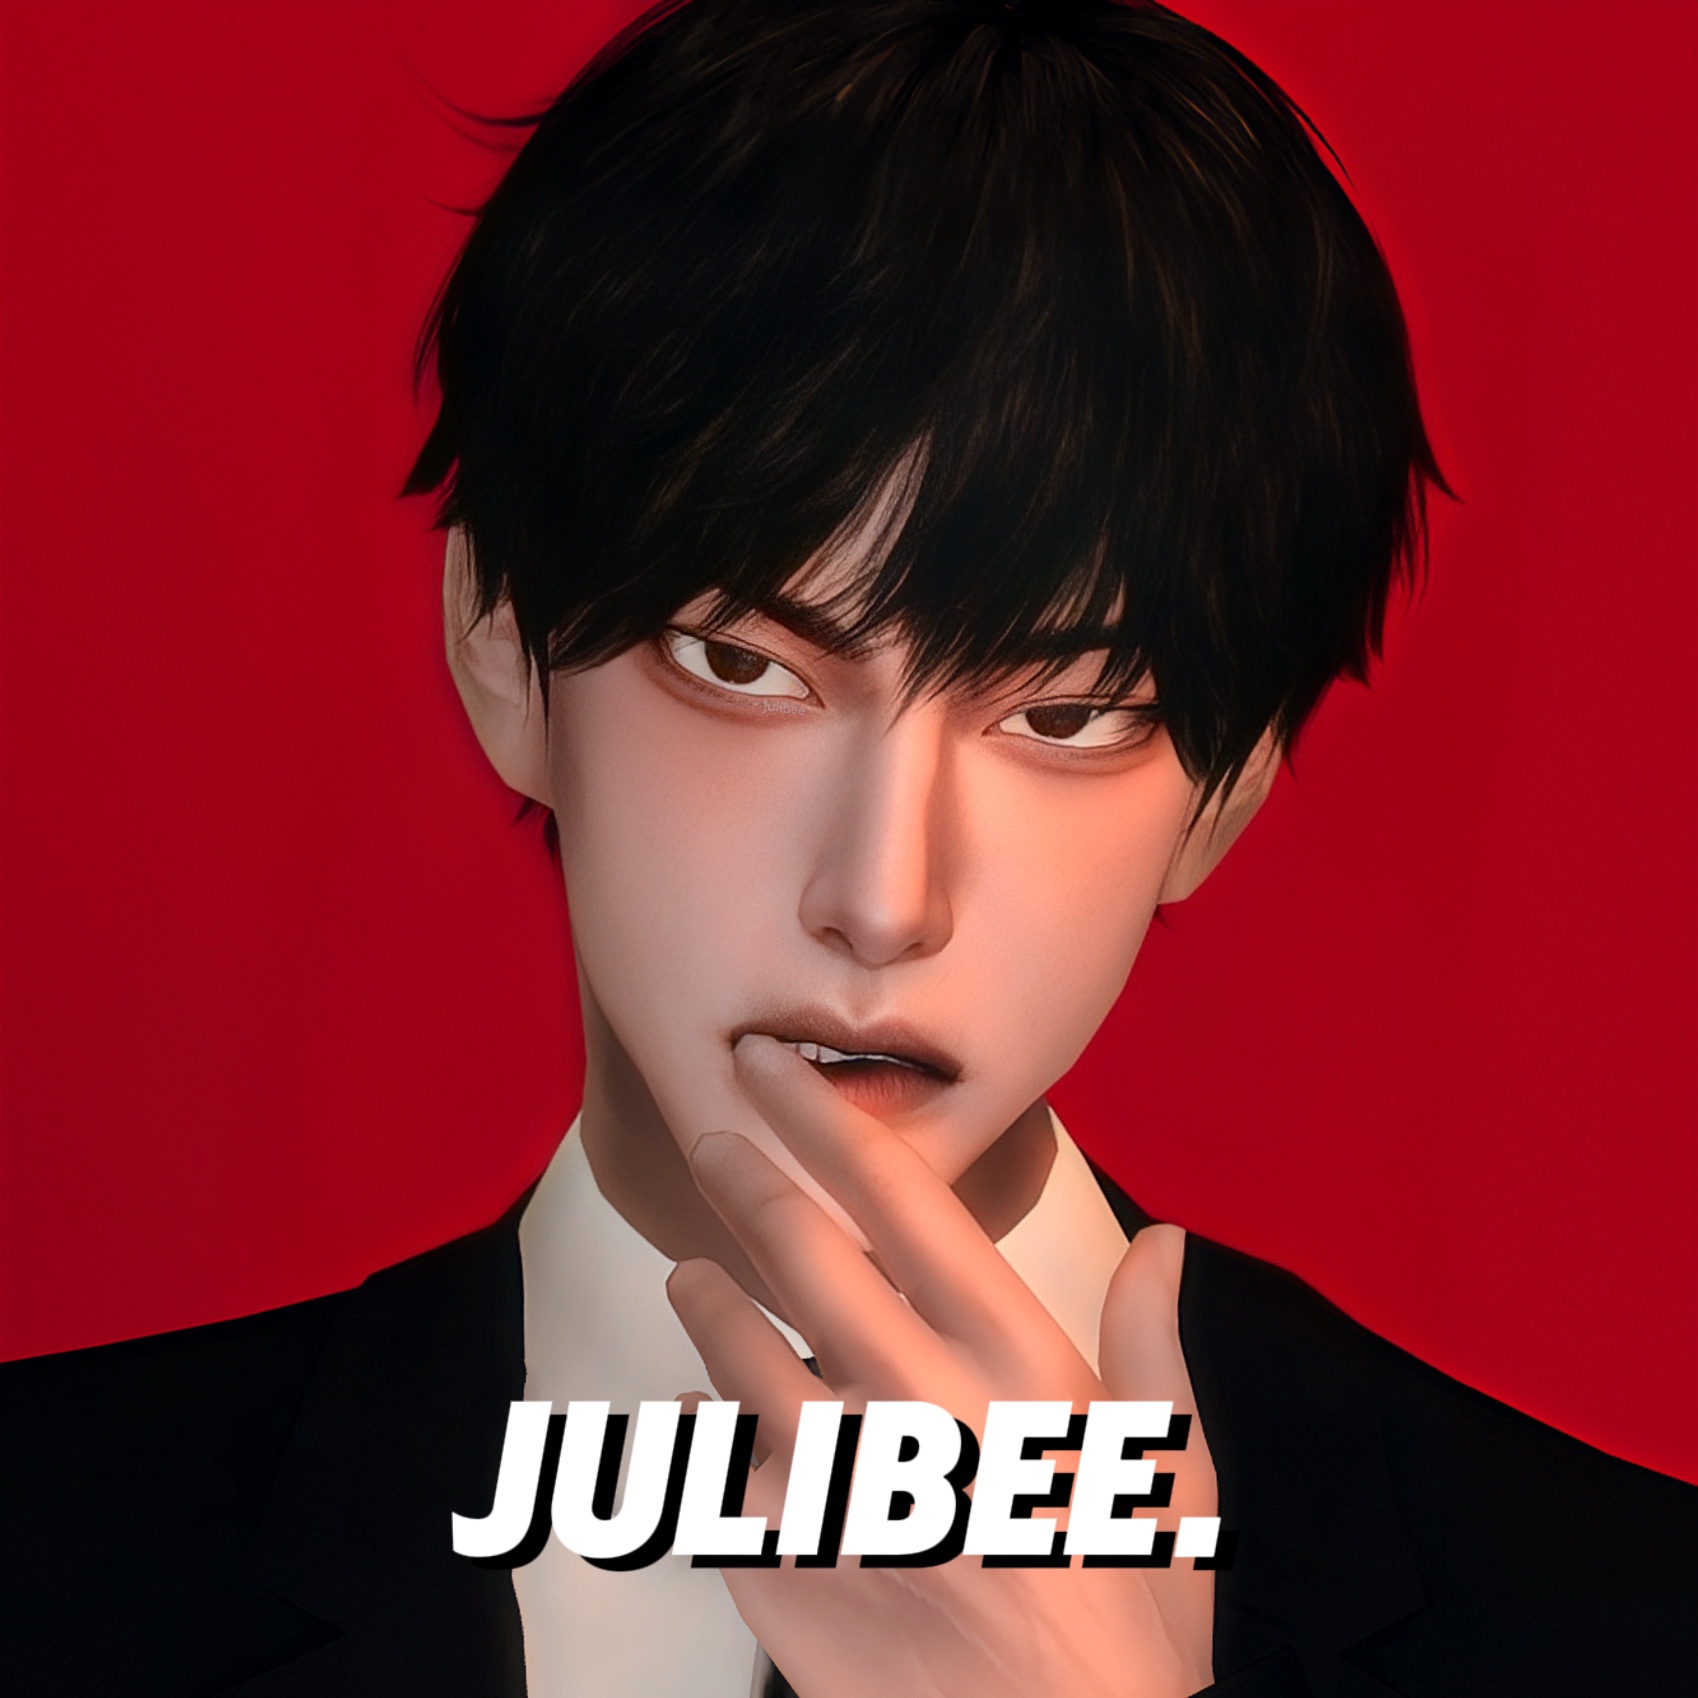 【Julibee】41权泽州 模拟人生4游戏人物角色Sims捏脸小人数据